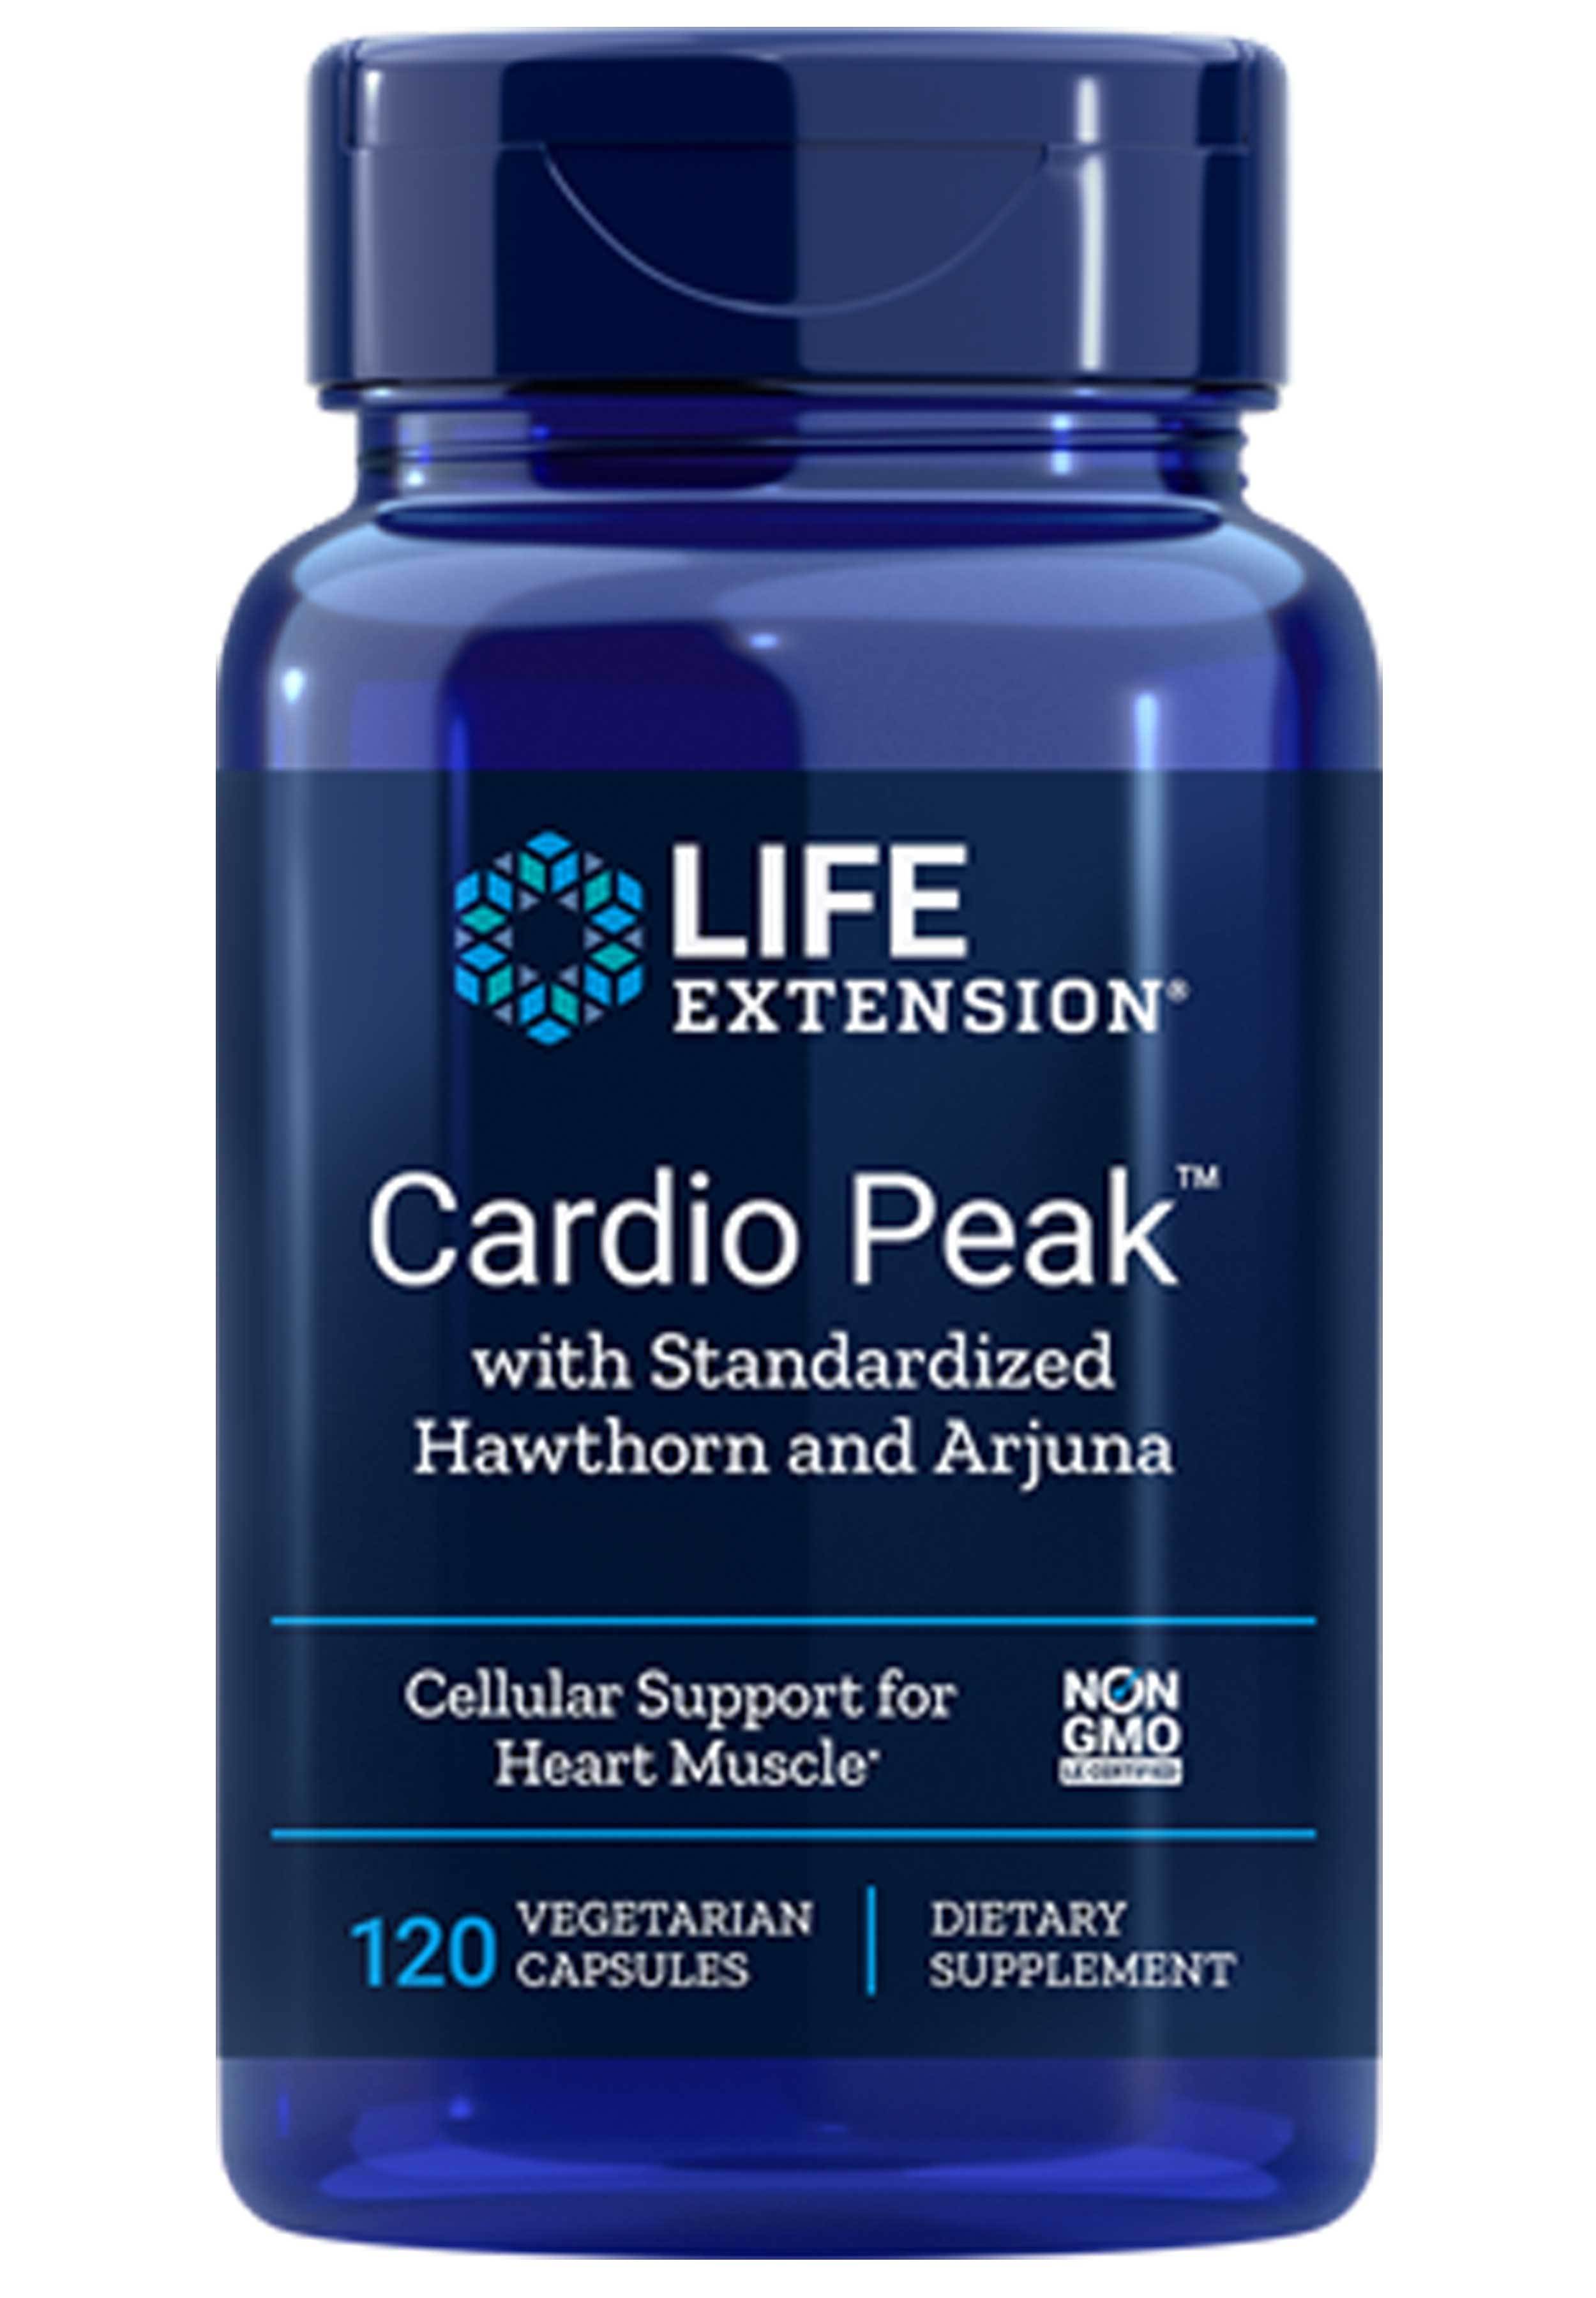 Life Extension Cardio Peak with Standardized Hawthorn and Arjuna